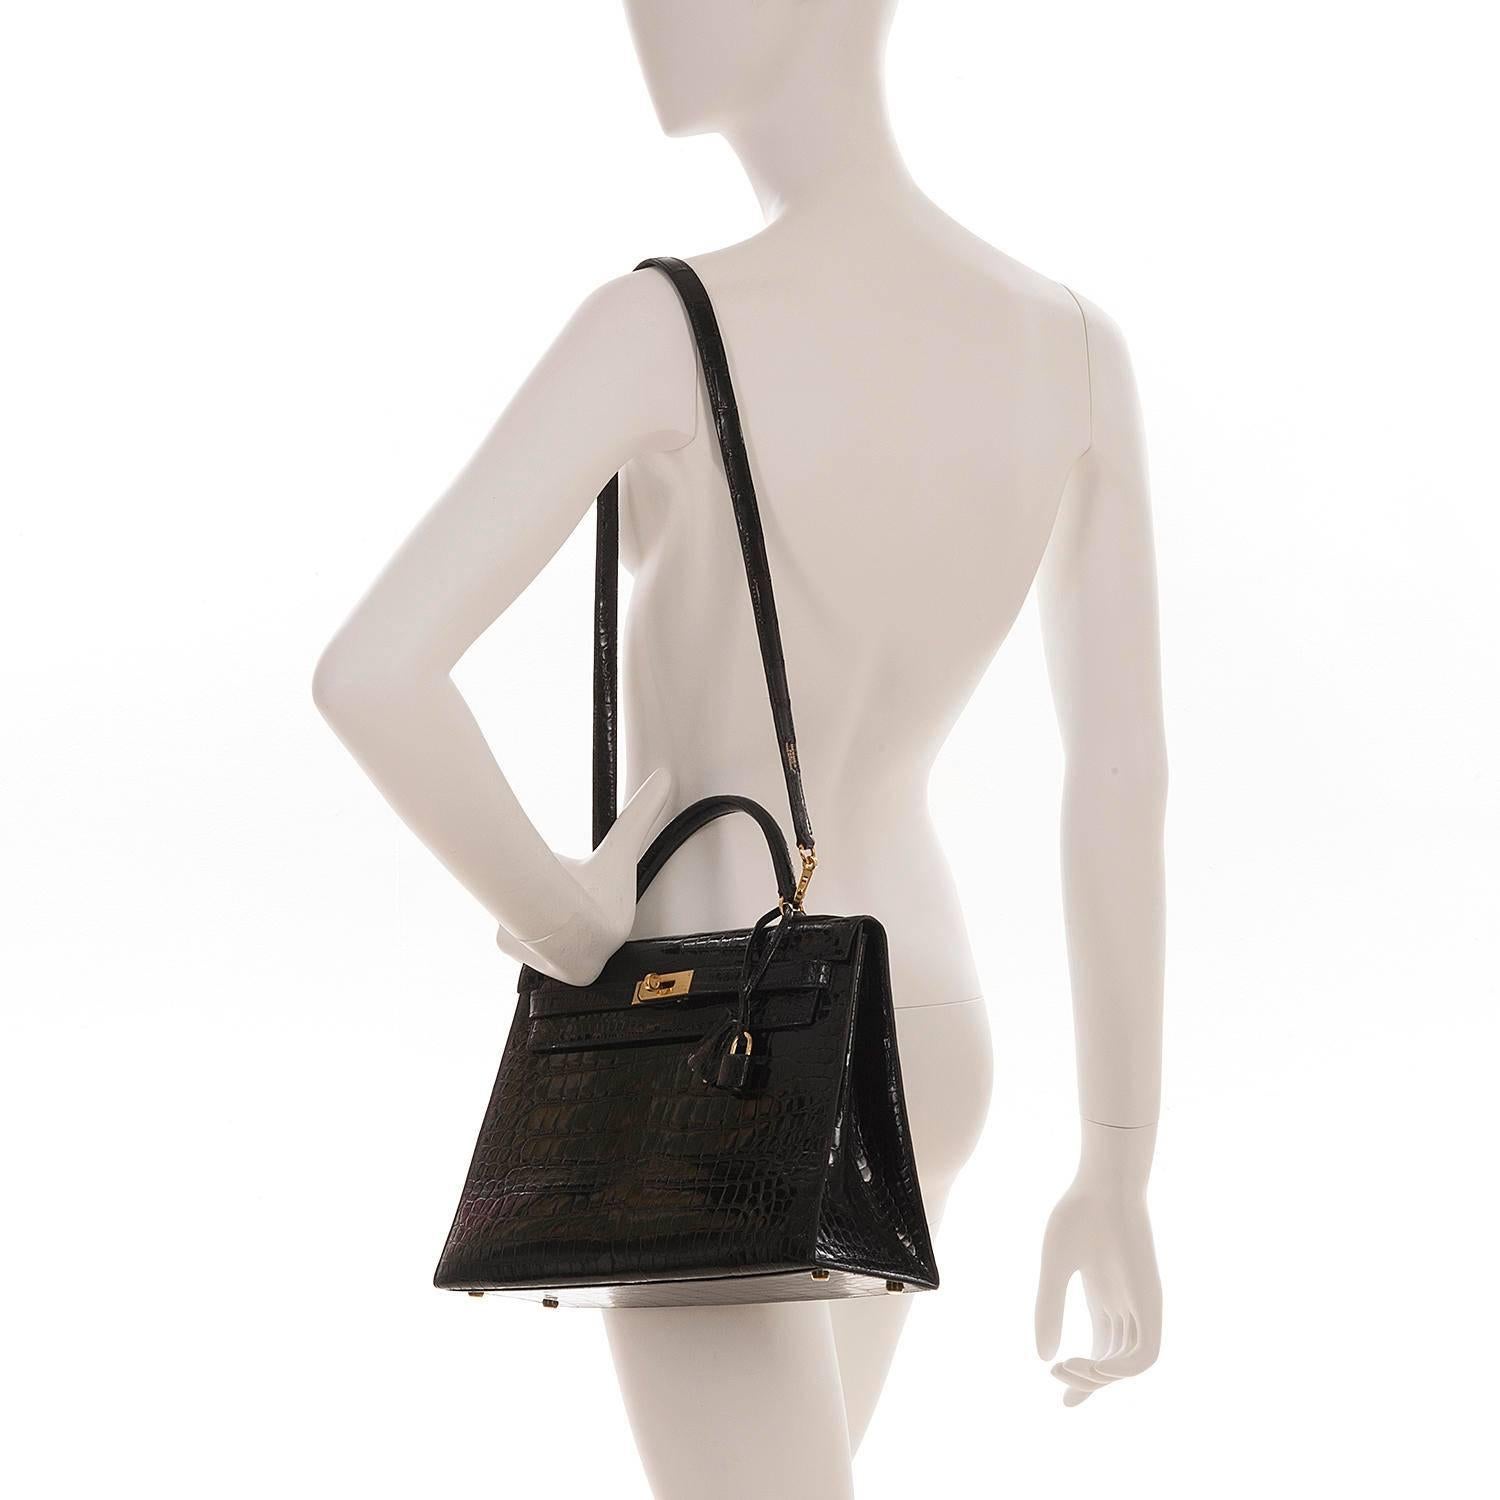 Pristine Hermes 32cm Shiny Black Crocodile Kelly Bag with Shoulder Strap and GHW 6